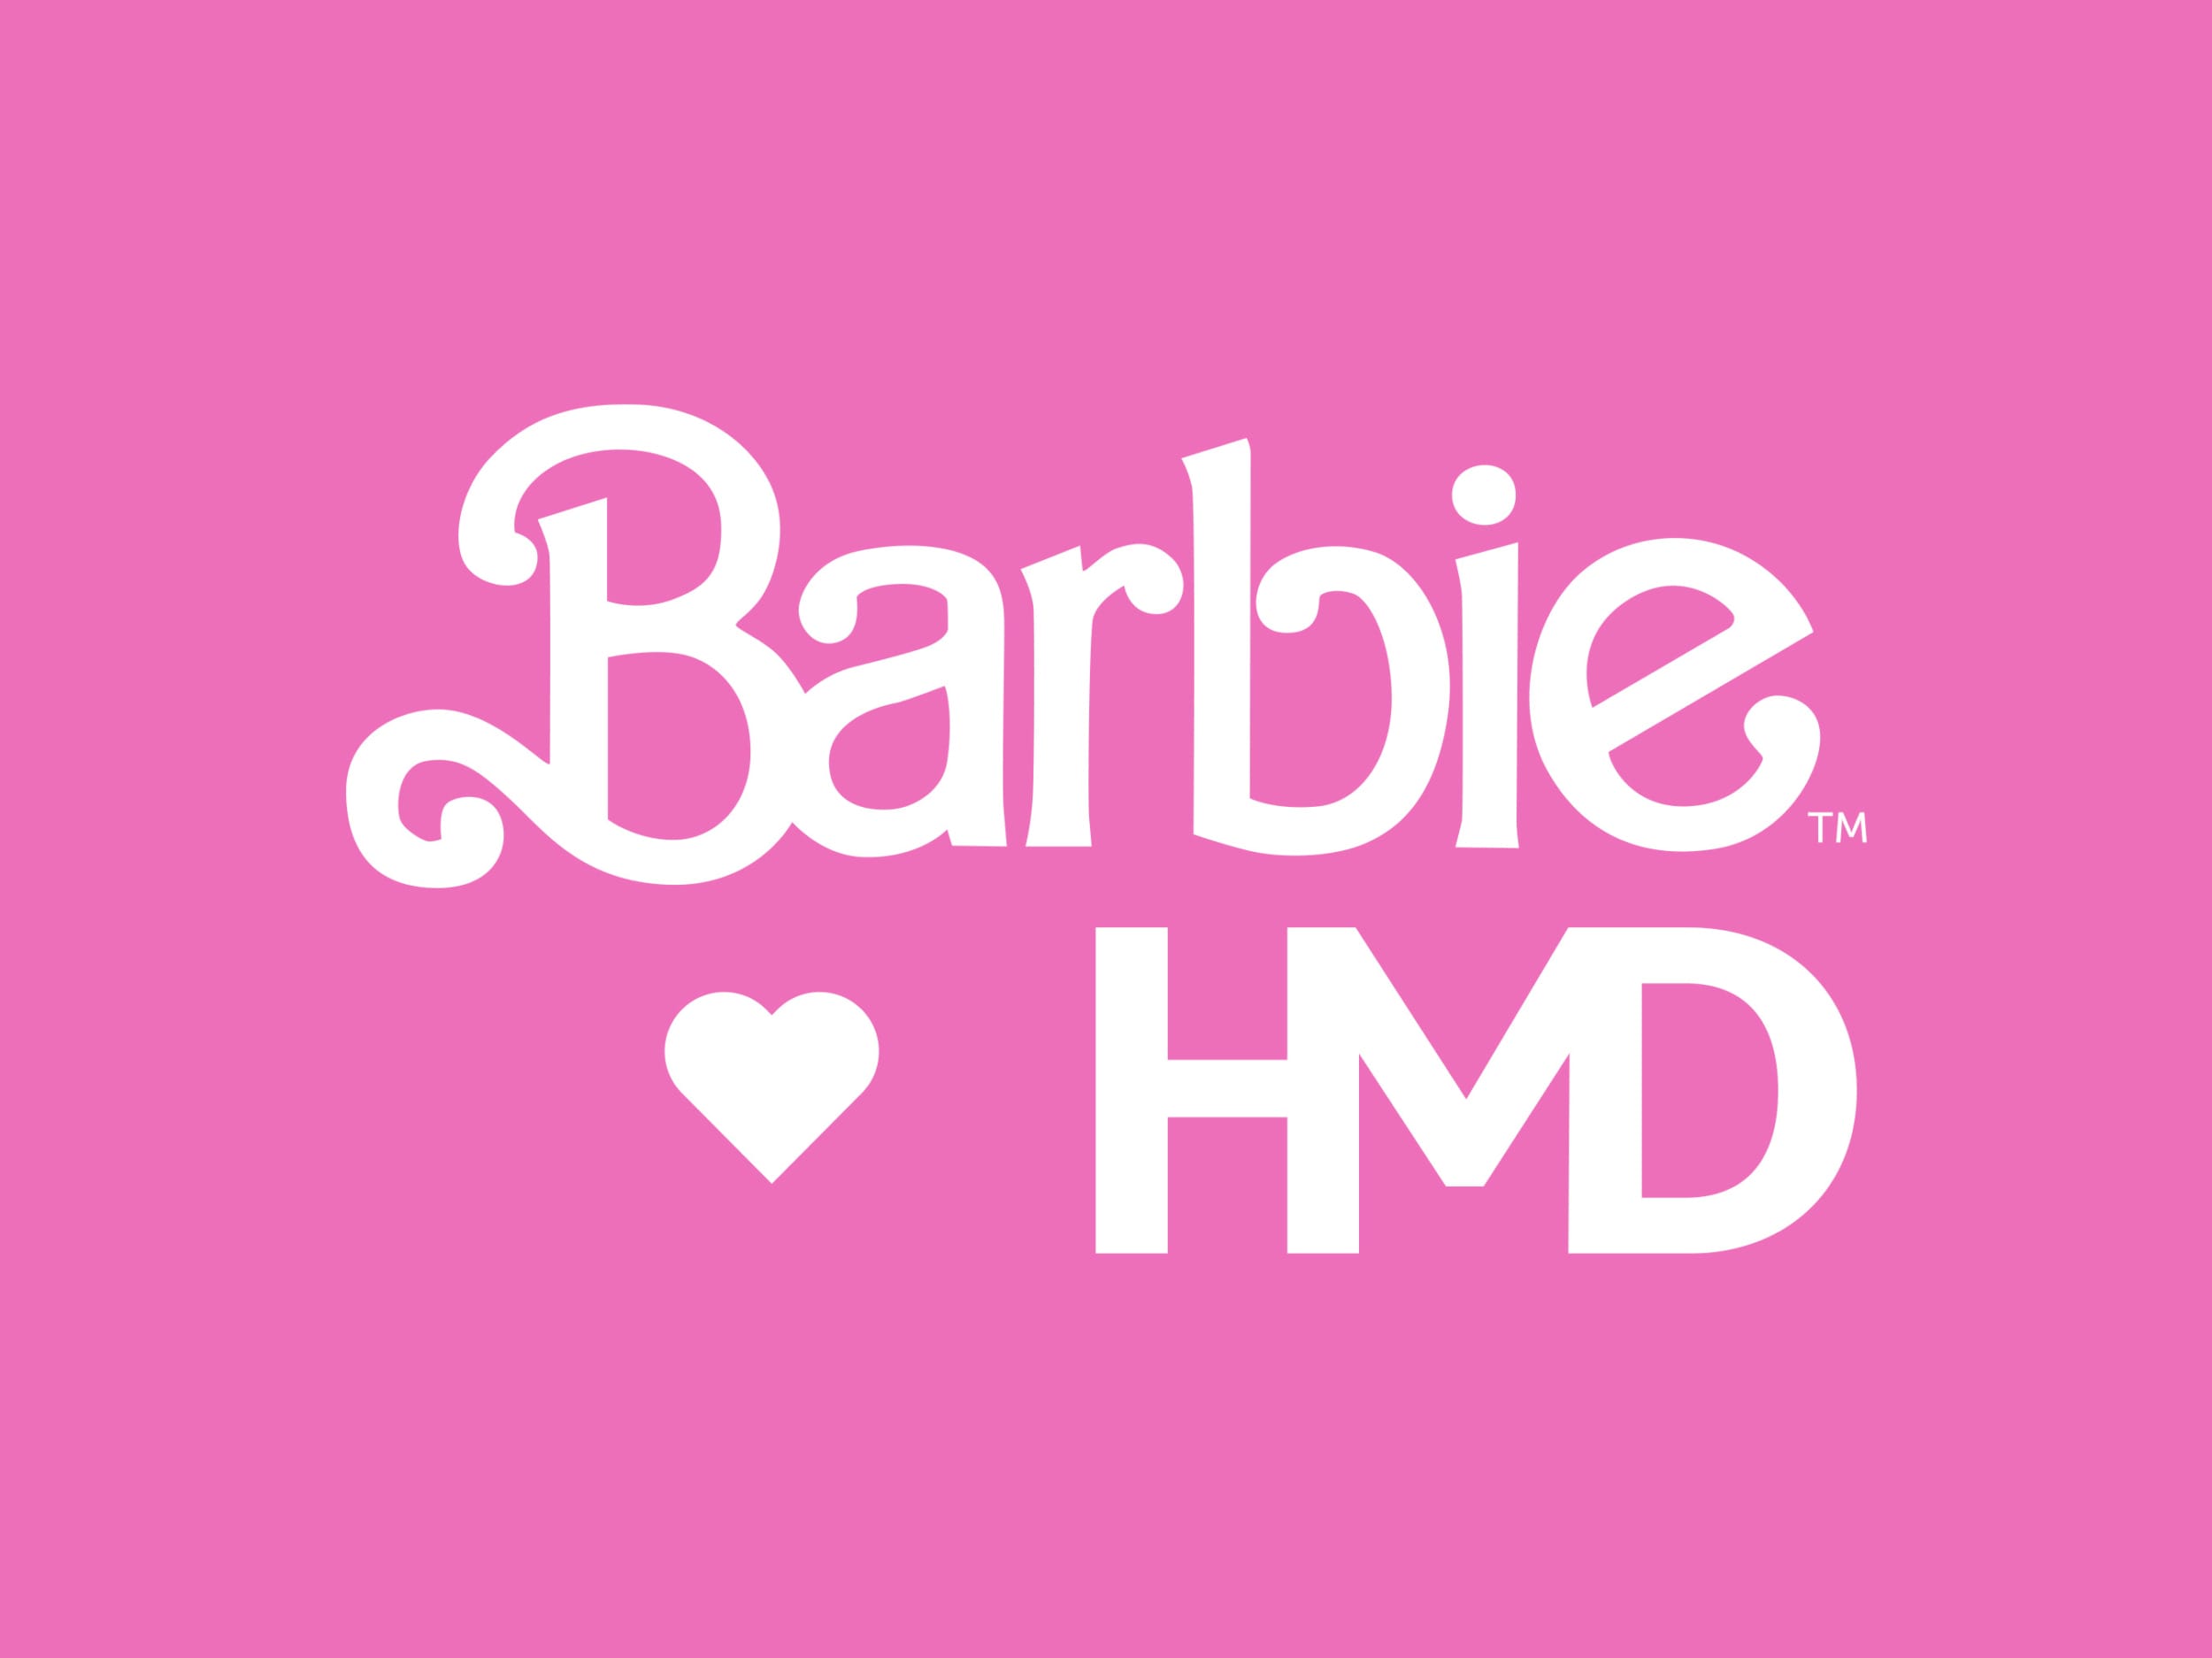 Barbie x HMD